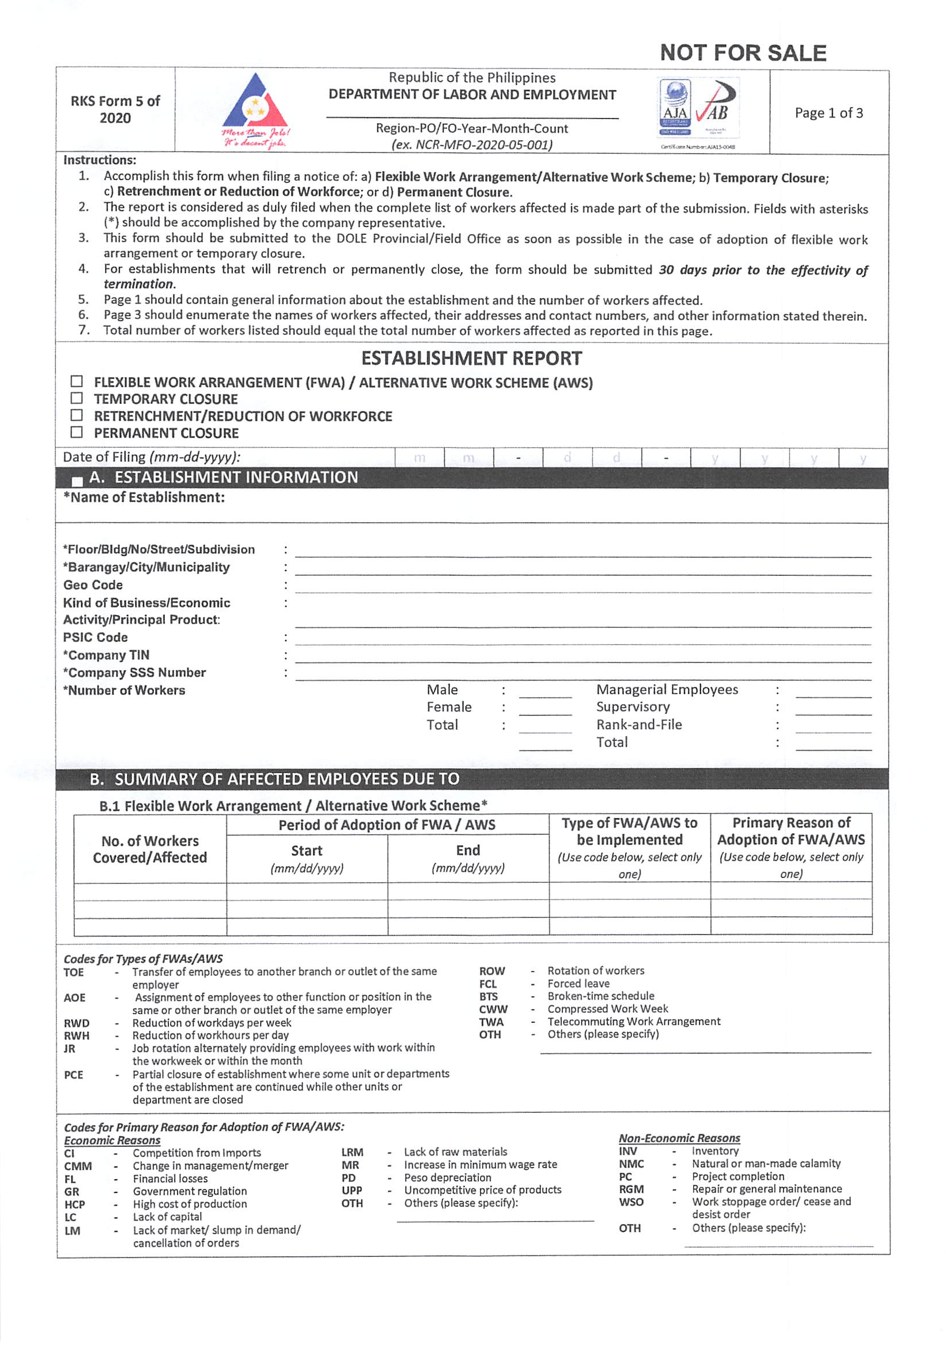 Establishment Report Form (RKS Form 5) page 1